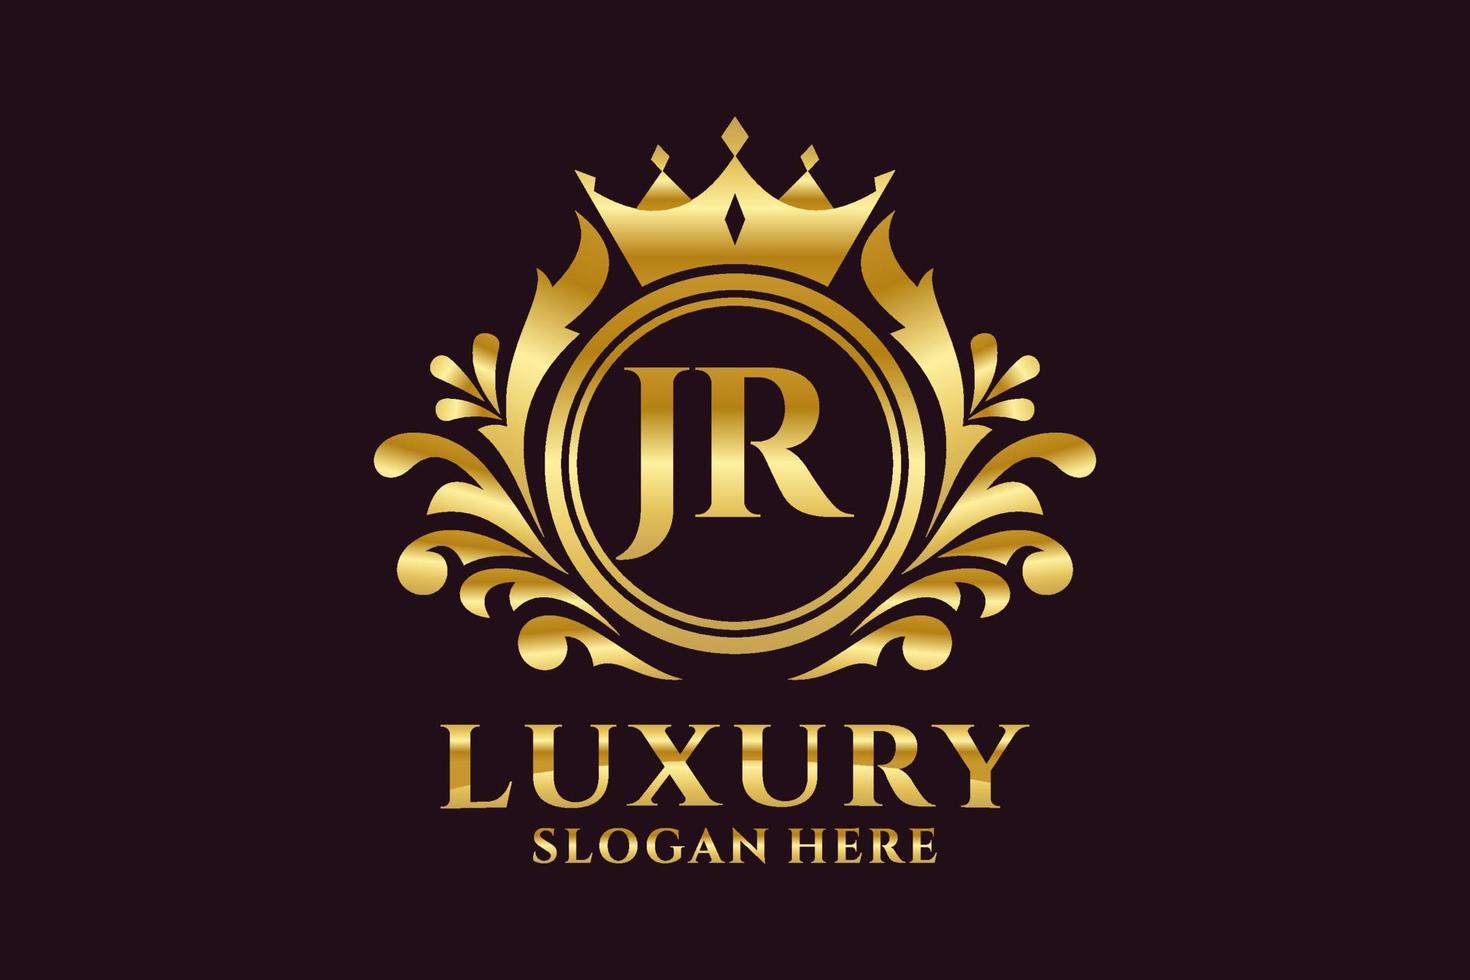 Initial jr Letter Royal Luxury Logo Vorlage in Vektorgrafiken für luxuriöse Branding-Projekte und andere Vektorillustrationen. vektor